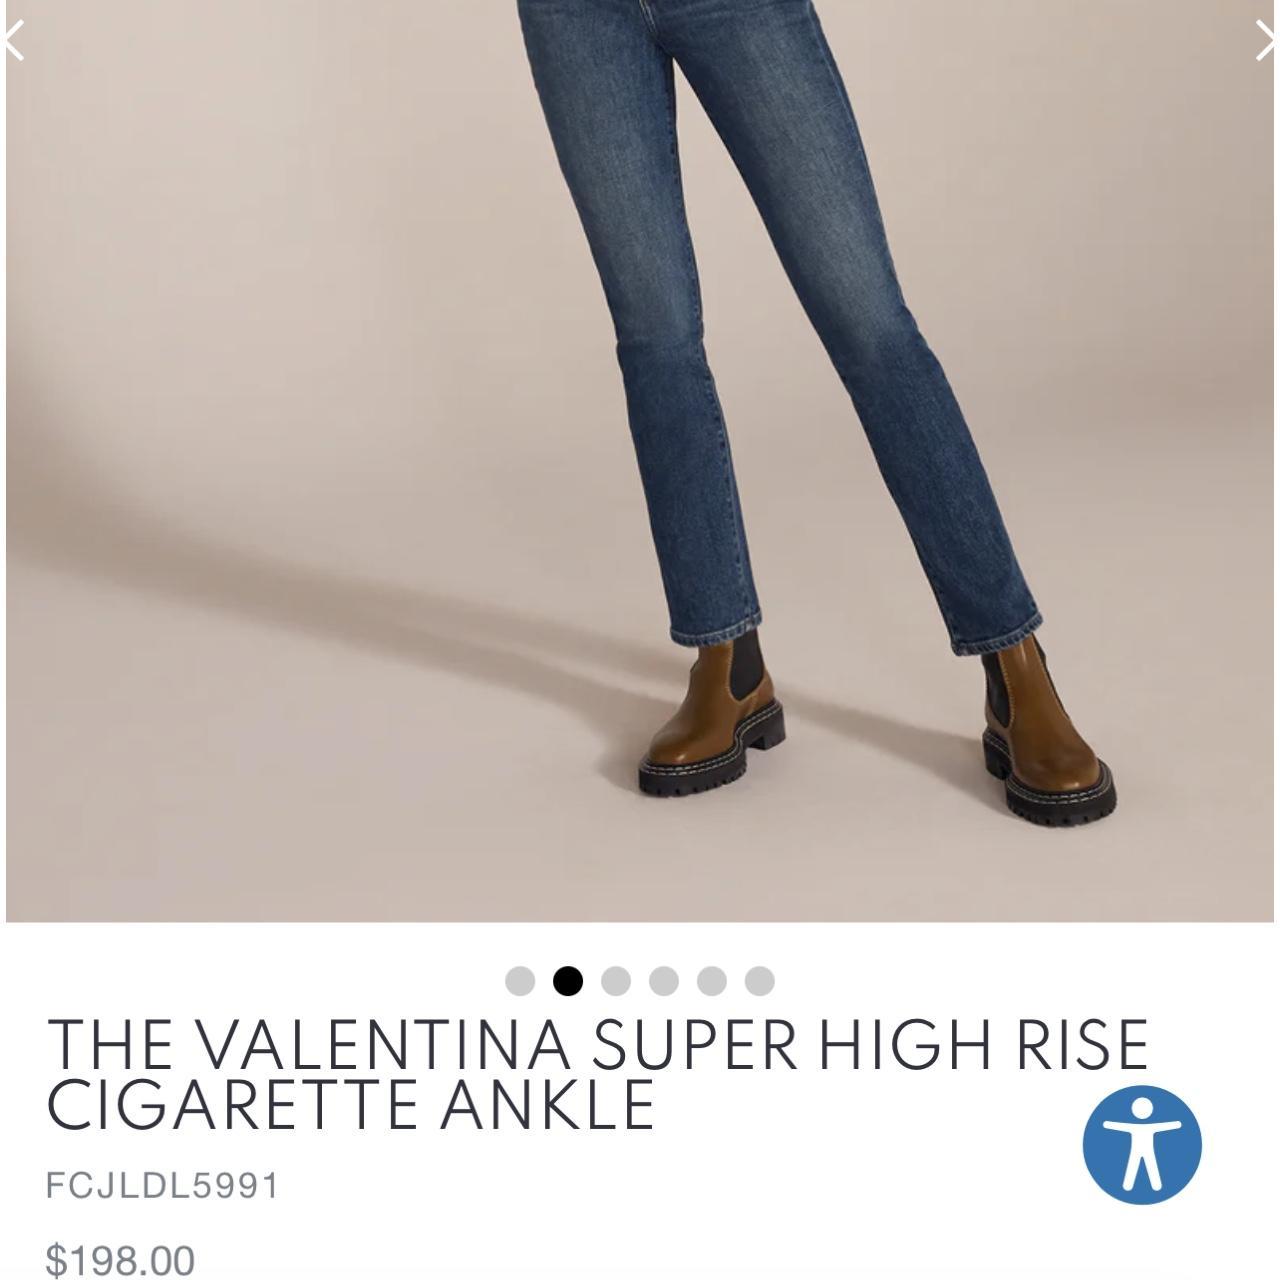 THE VALENTINA SUPER HIGH RISE CIGARETTE ANKLE